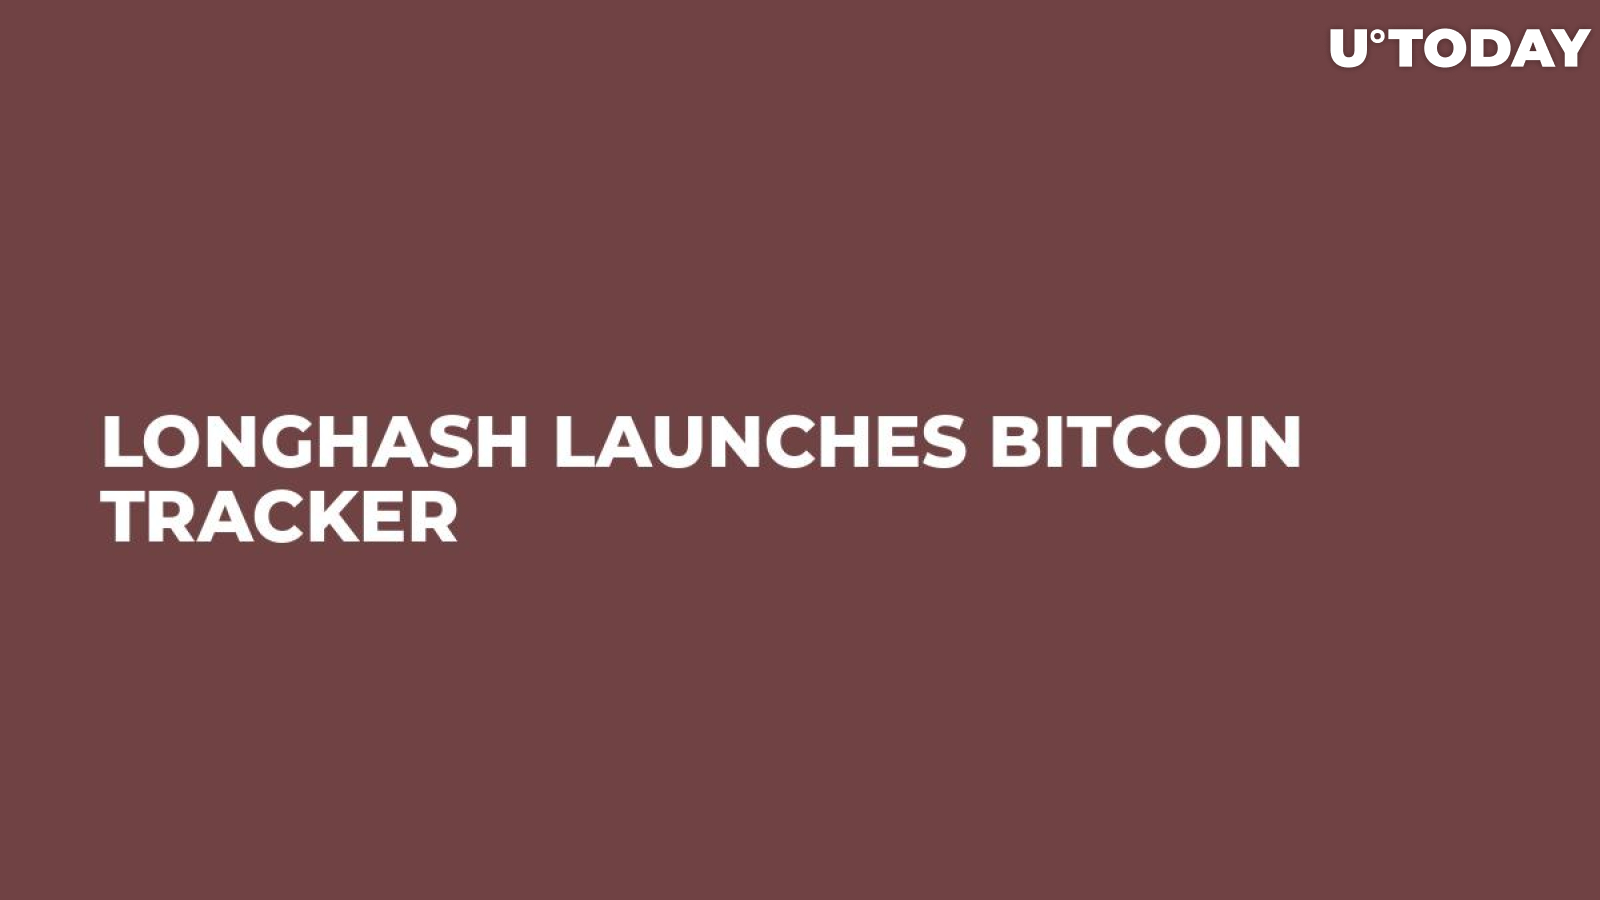 Longhash Launches Bitcoin Tracker